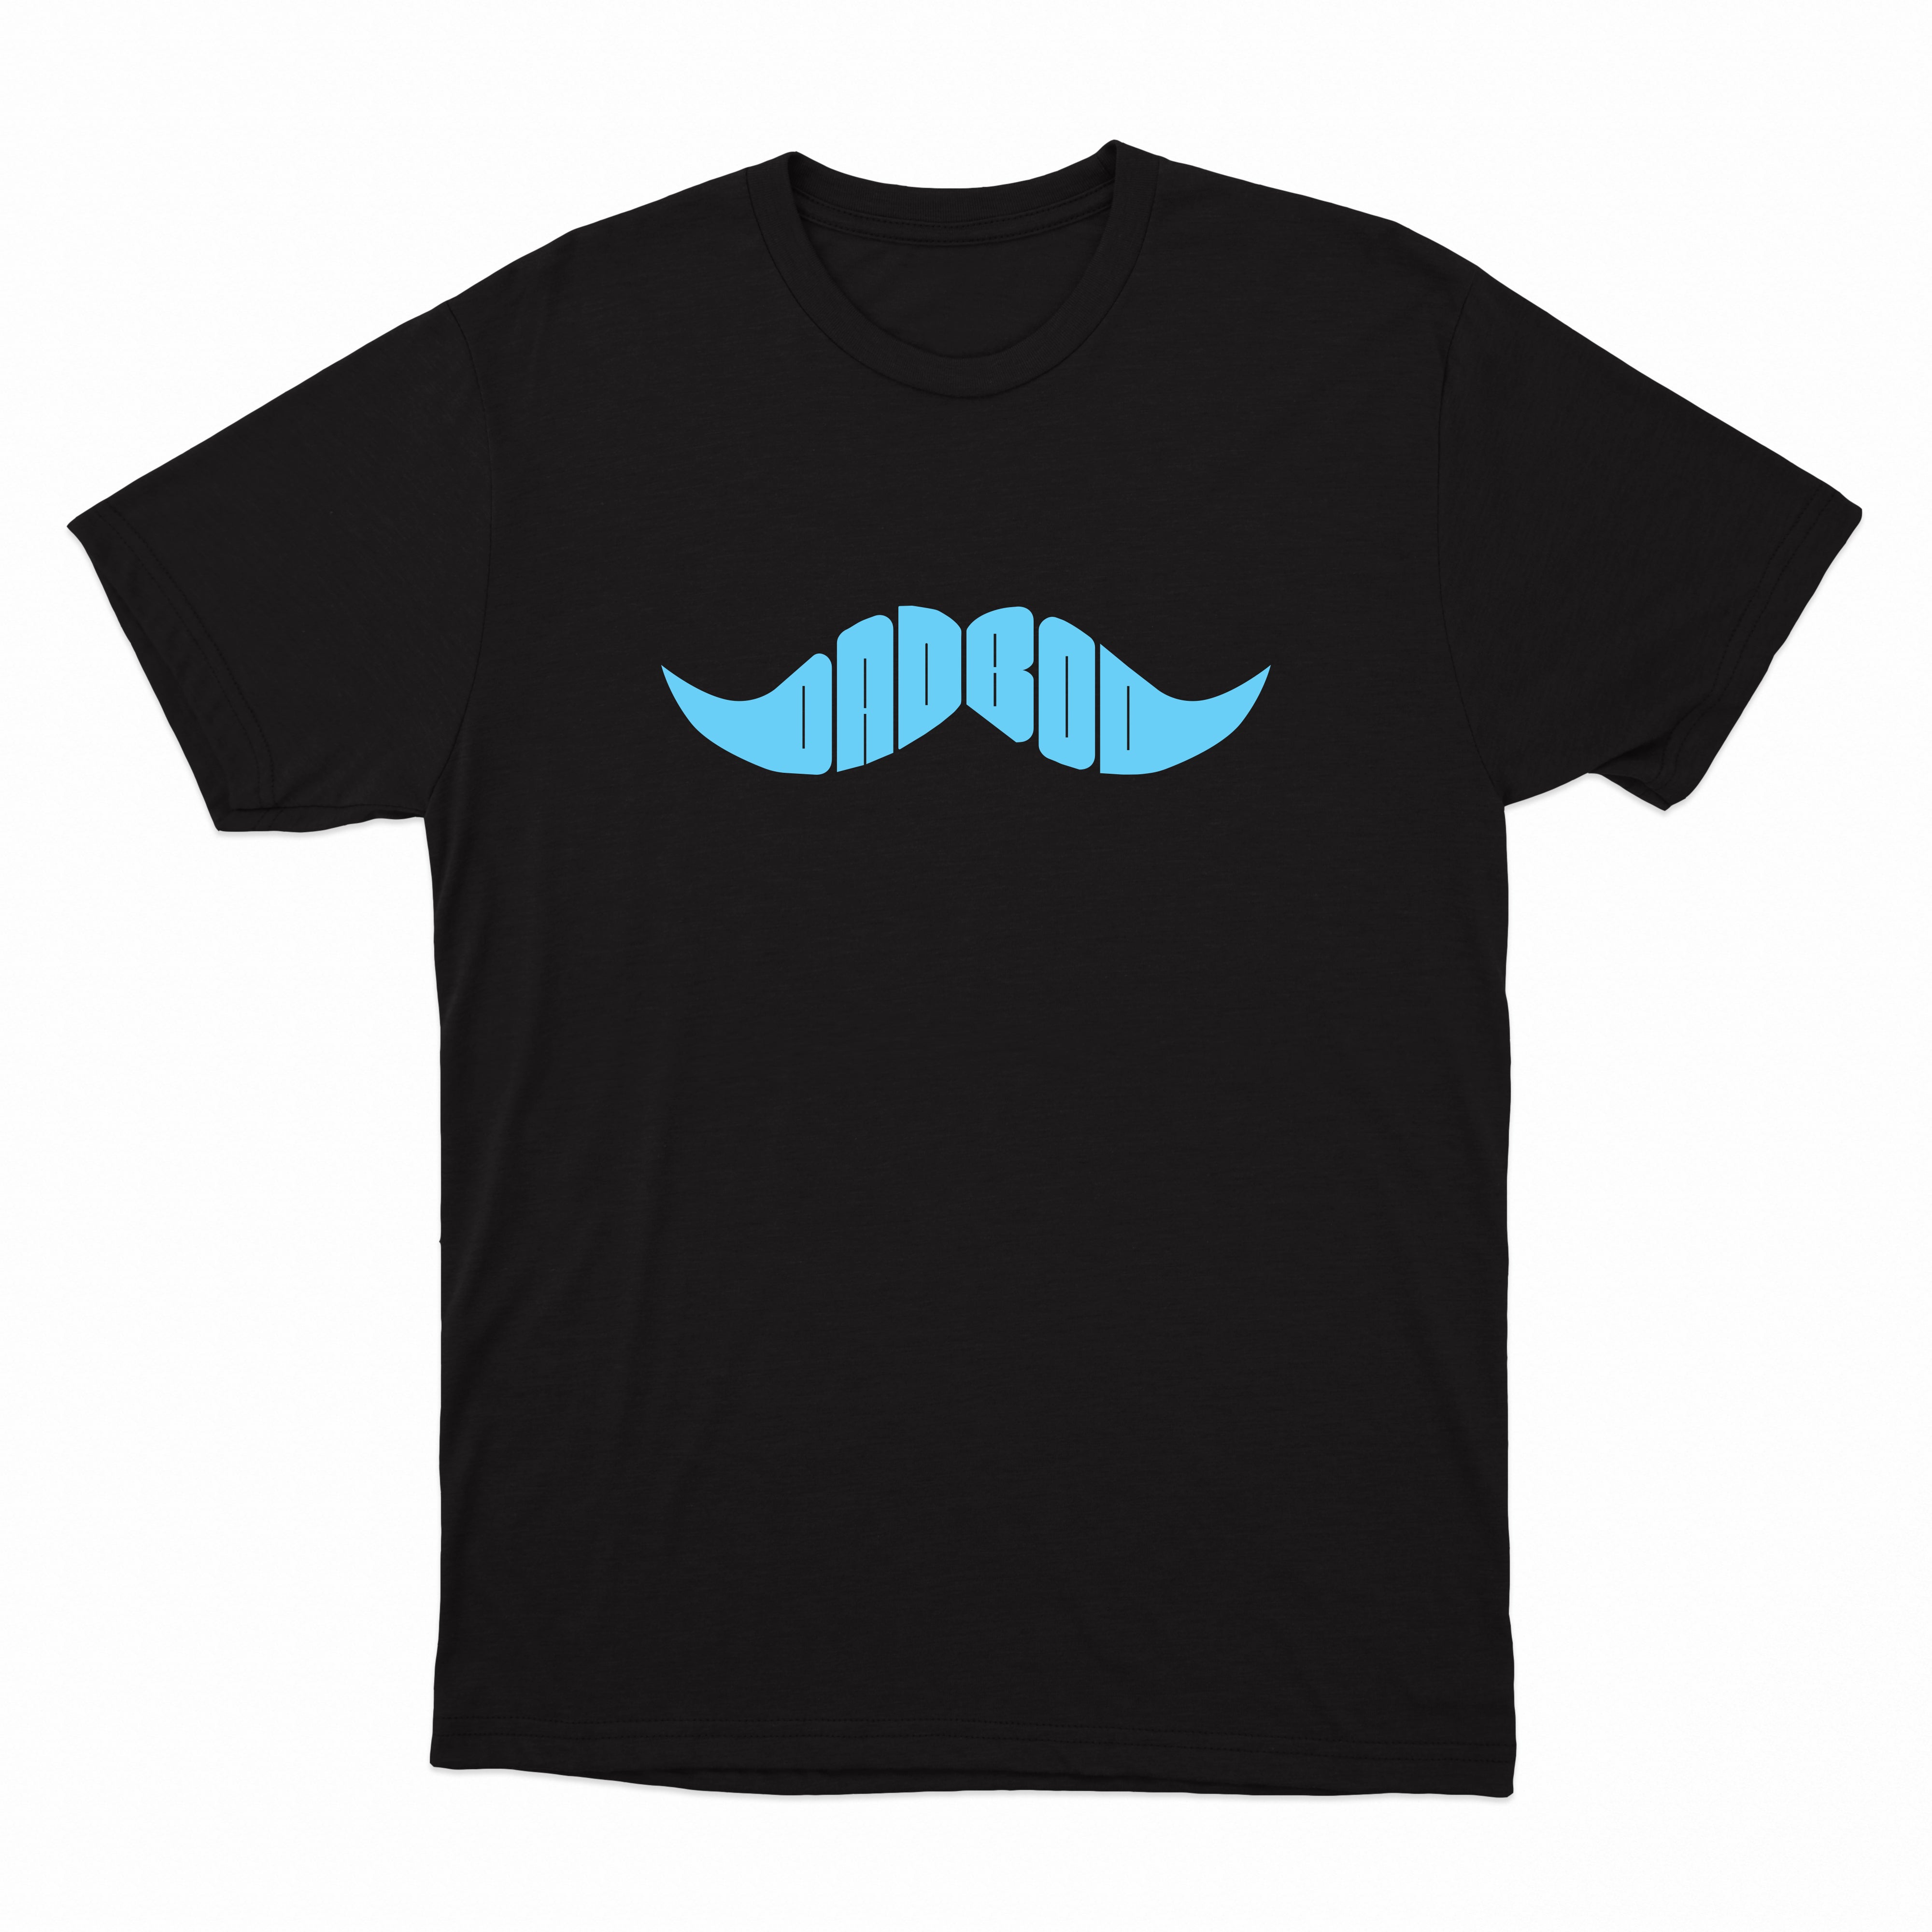 Limited Movember Mustache Shirt (Black)